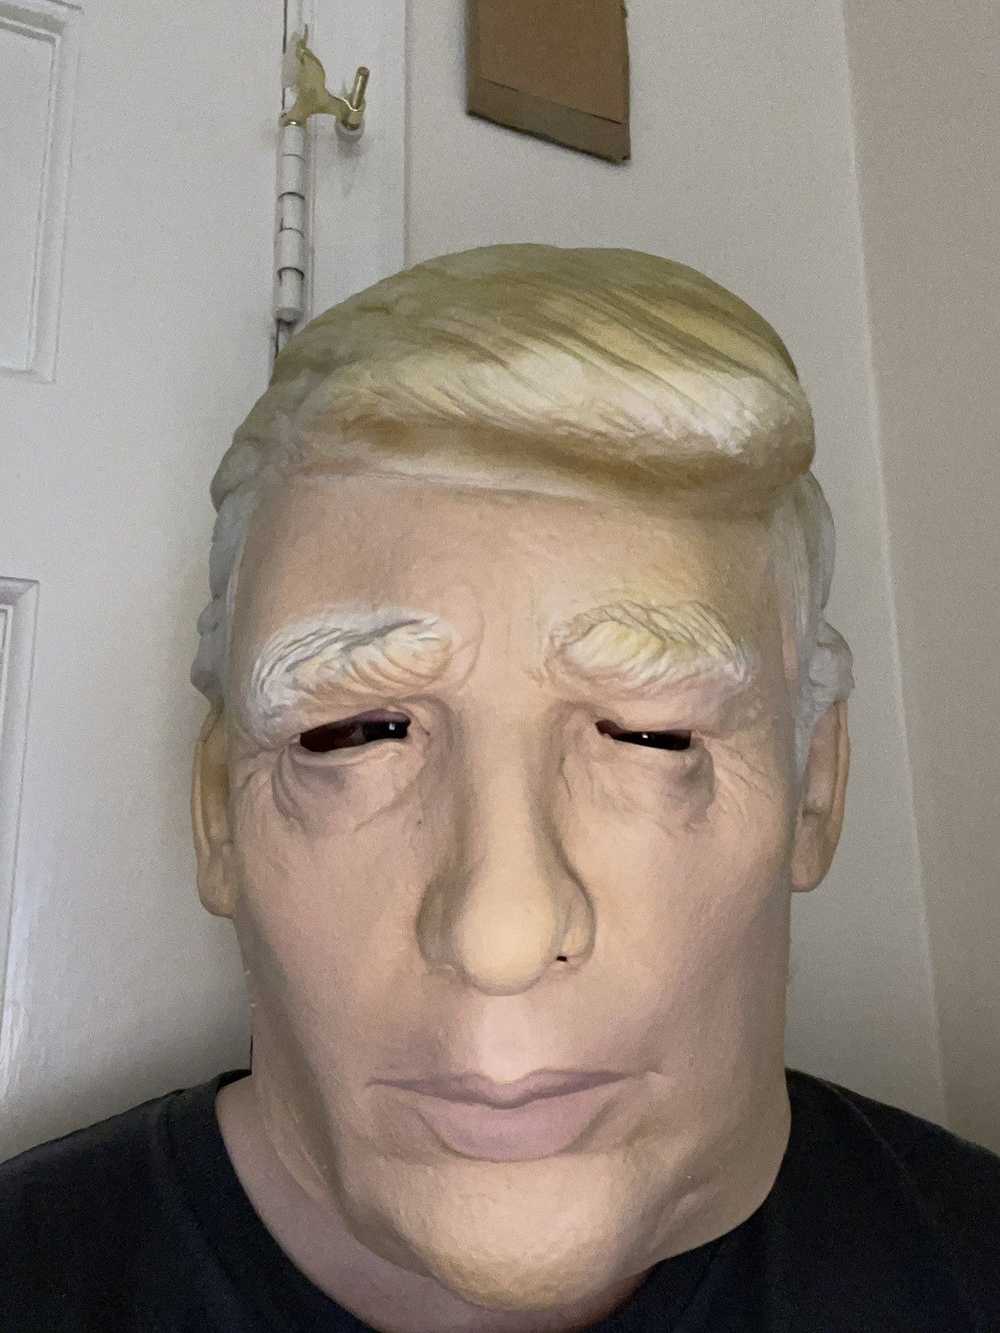 Donald Trump Donald Trump Mask (vintage, 2015) - image 1